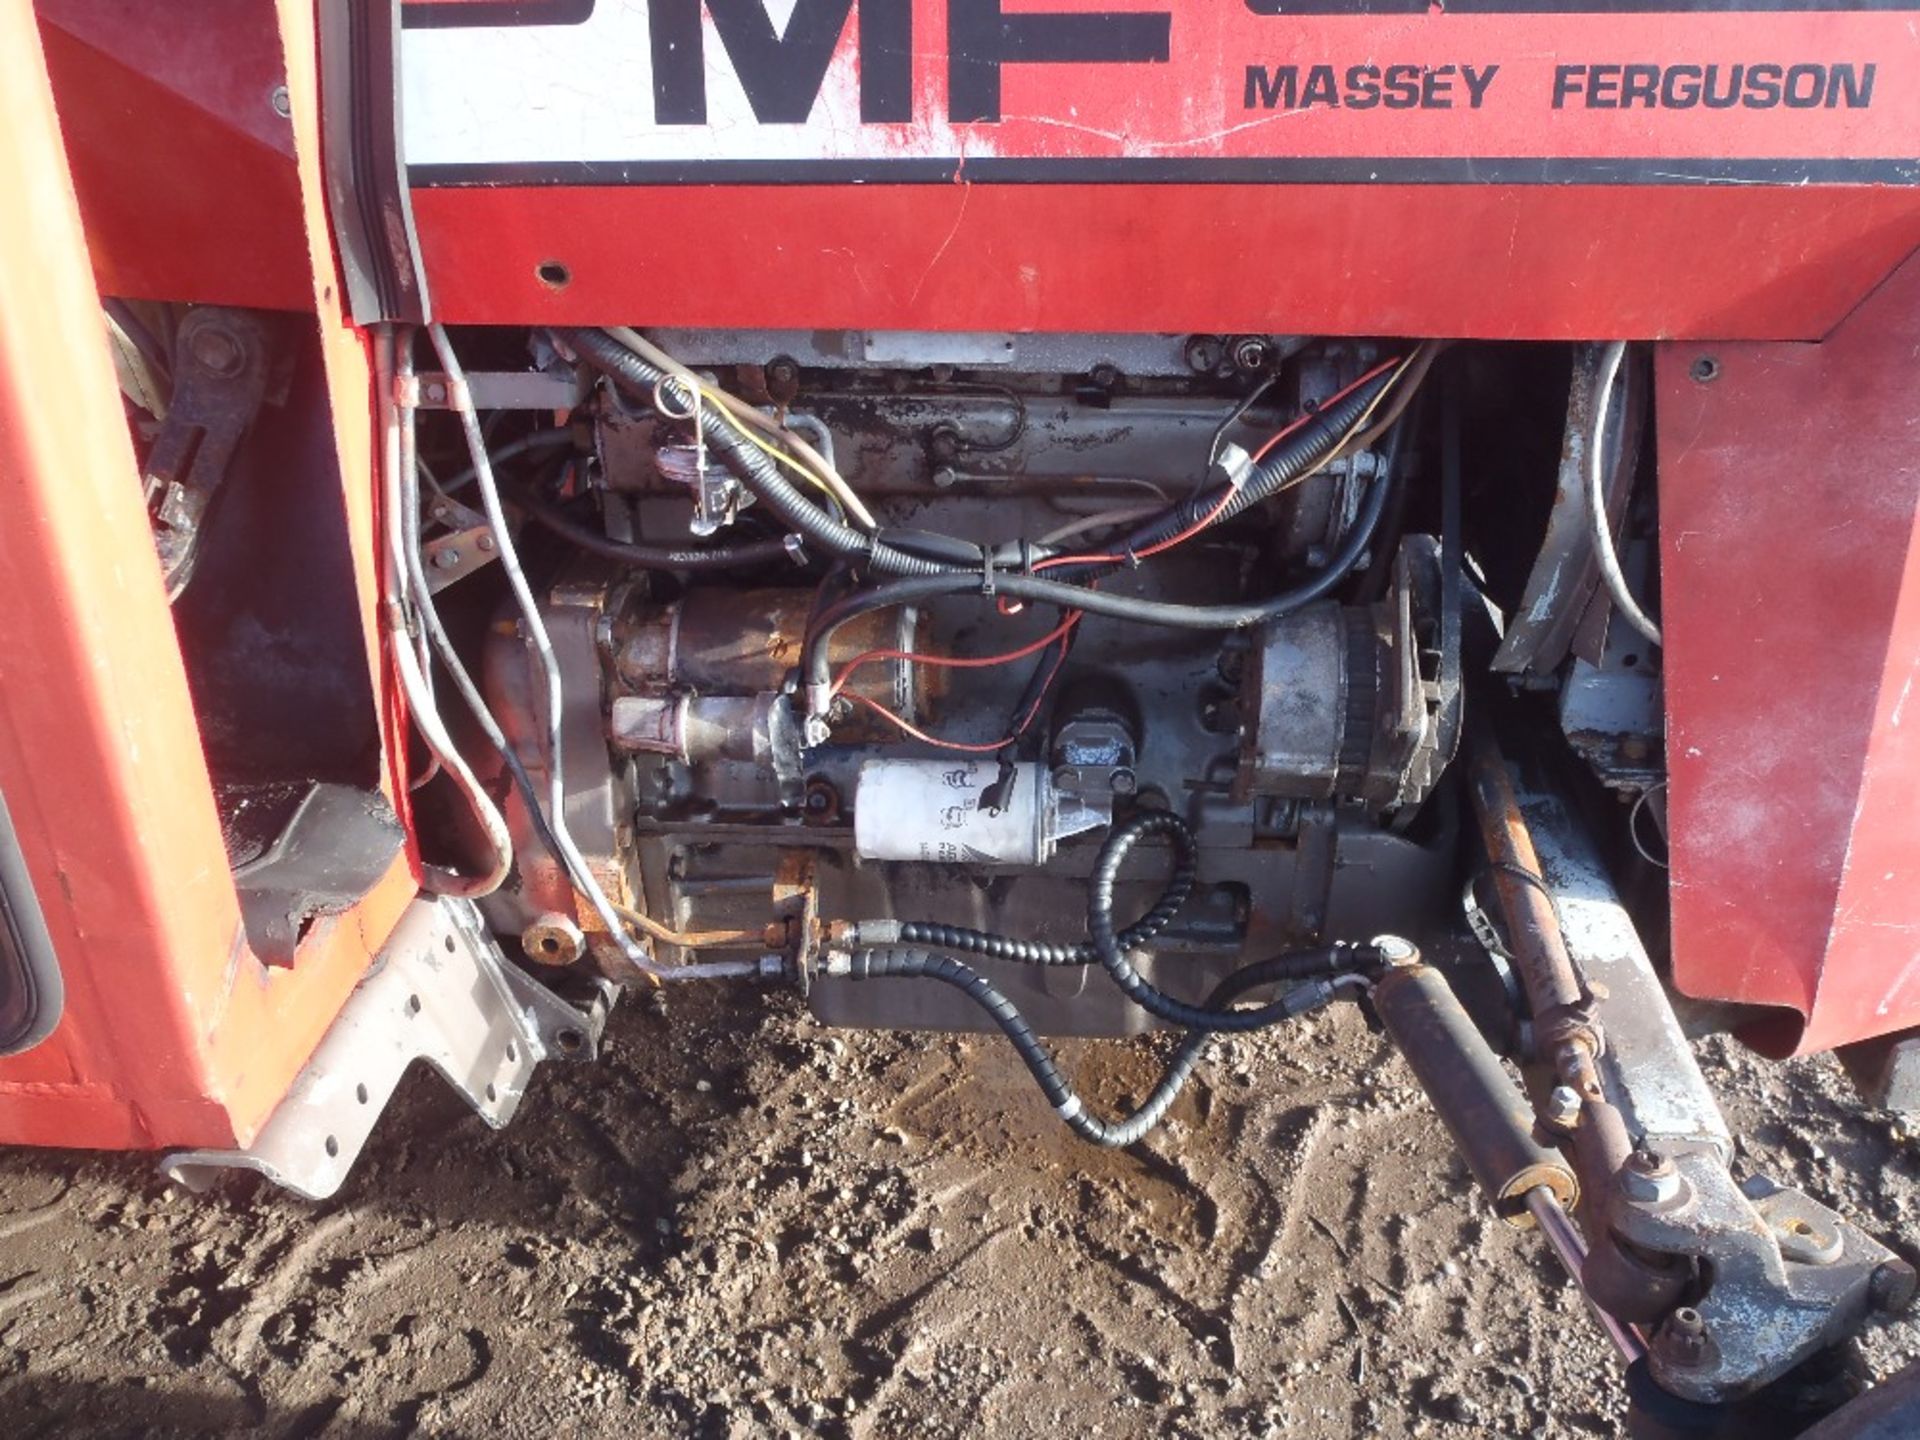 Massey ferguson 560 2x2 Tractor Ser No G308220 - Image 7 of 9